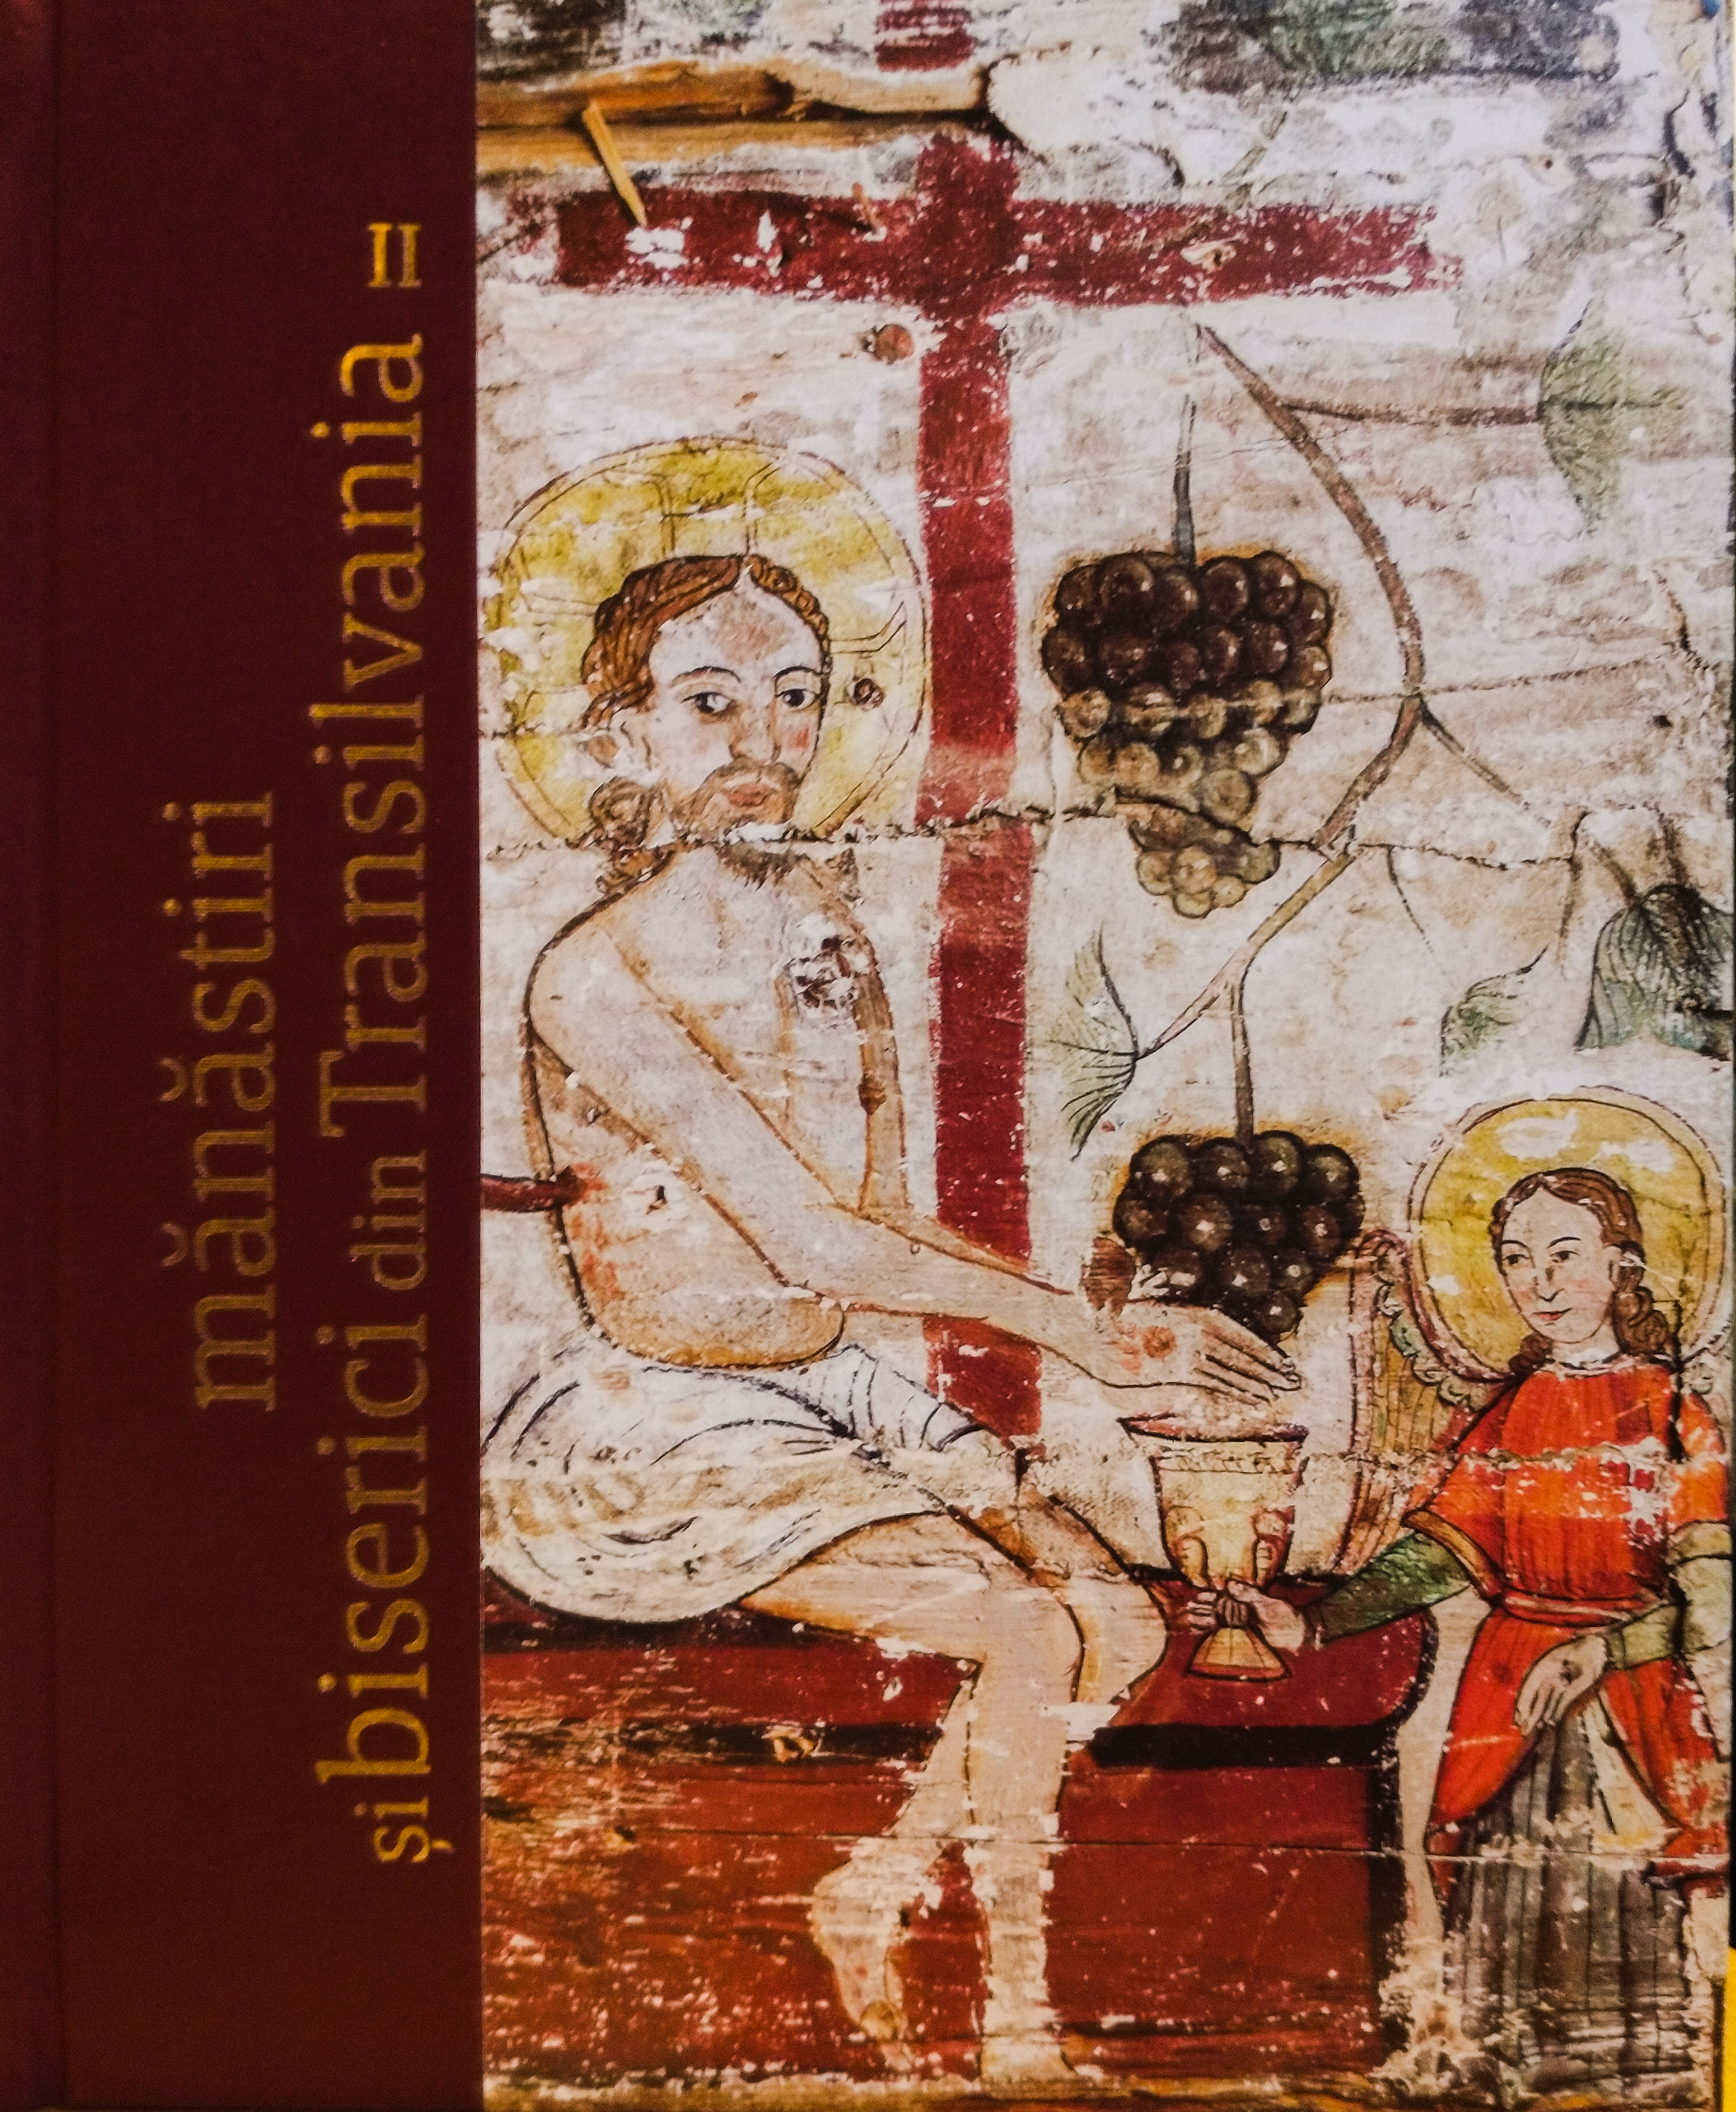 Manastiri si biserici din Transilvania in secolele XIII-XVIII, volumul 2